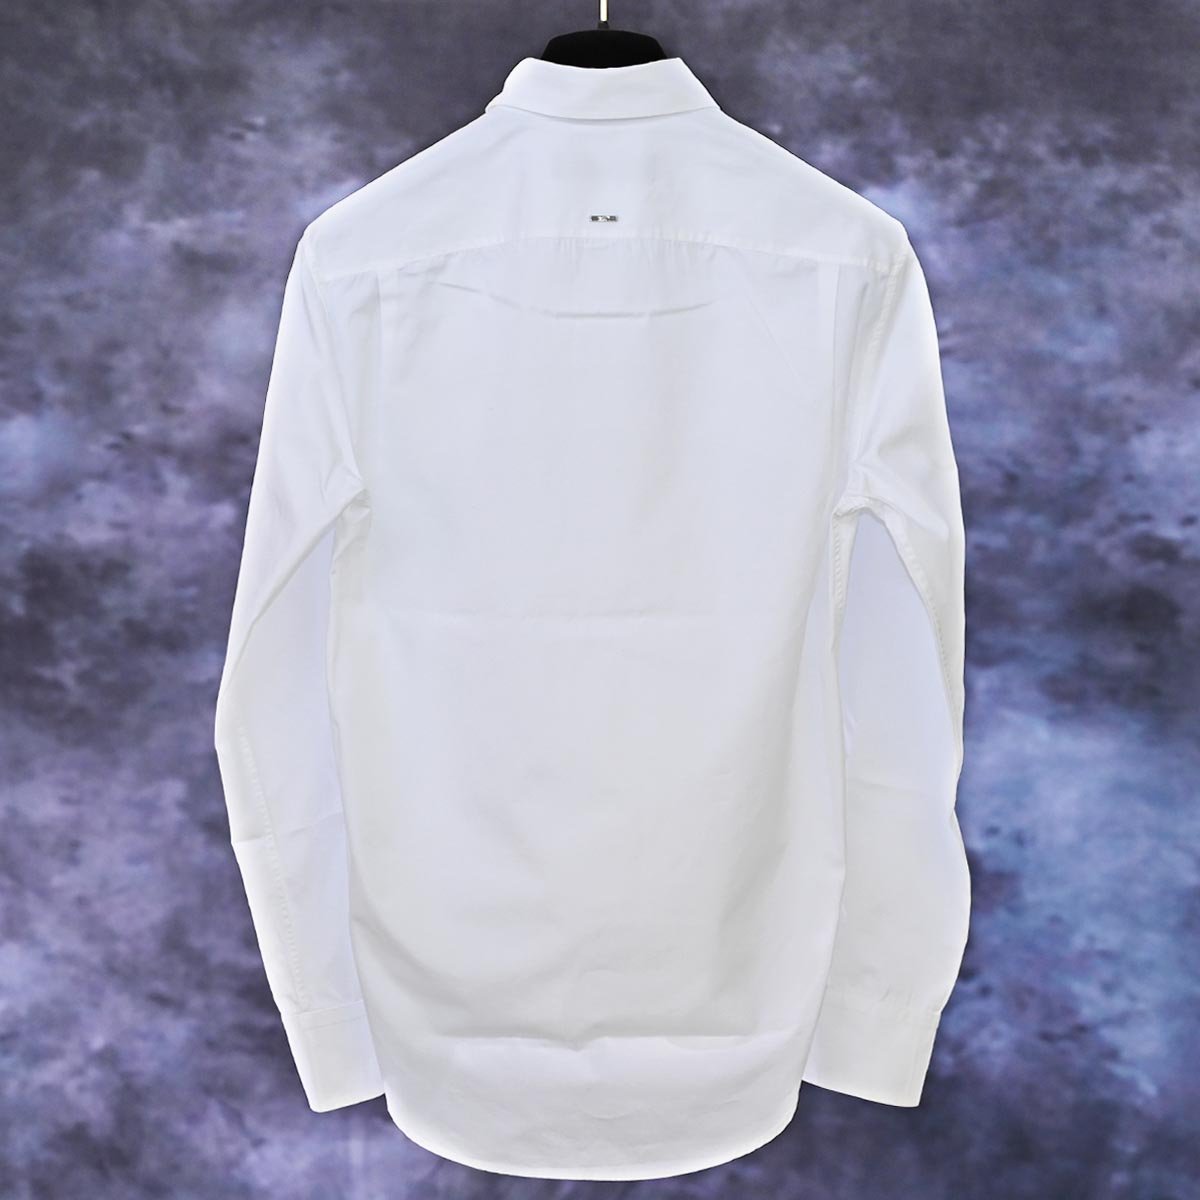  genuine article finest quality goods Louis Vuitton DNA staple z edition pure cotton dress shirt men's XS white long sleeve tops domestic regular goods 